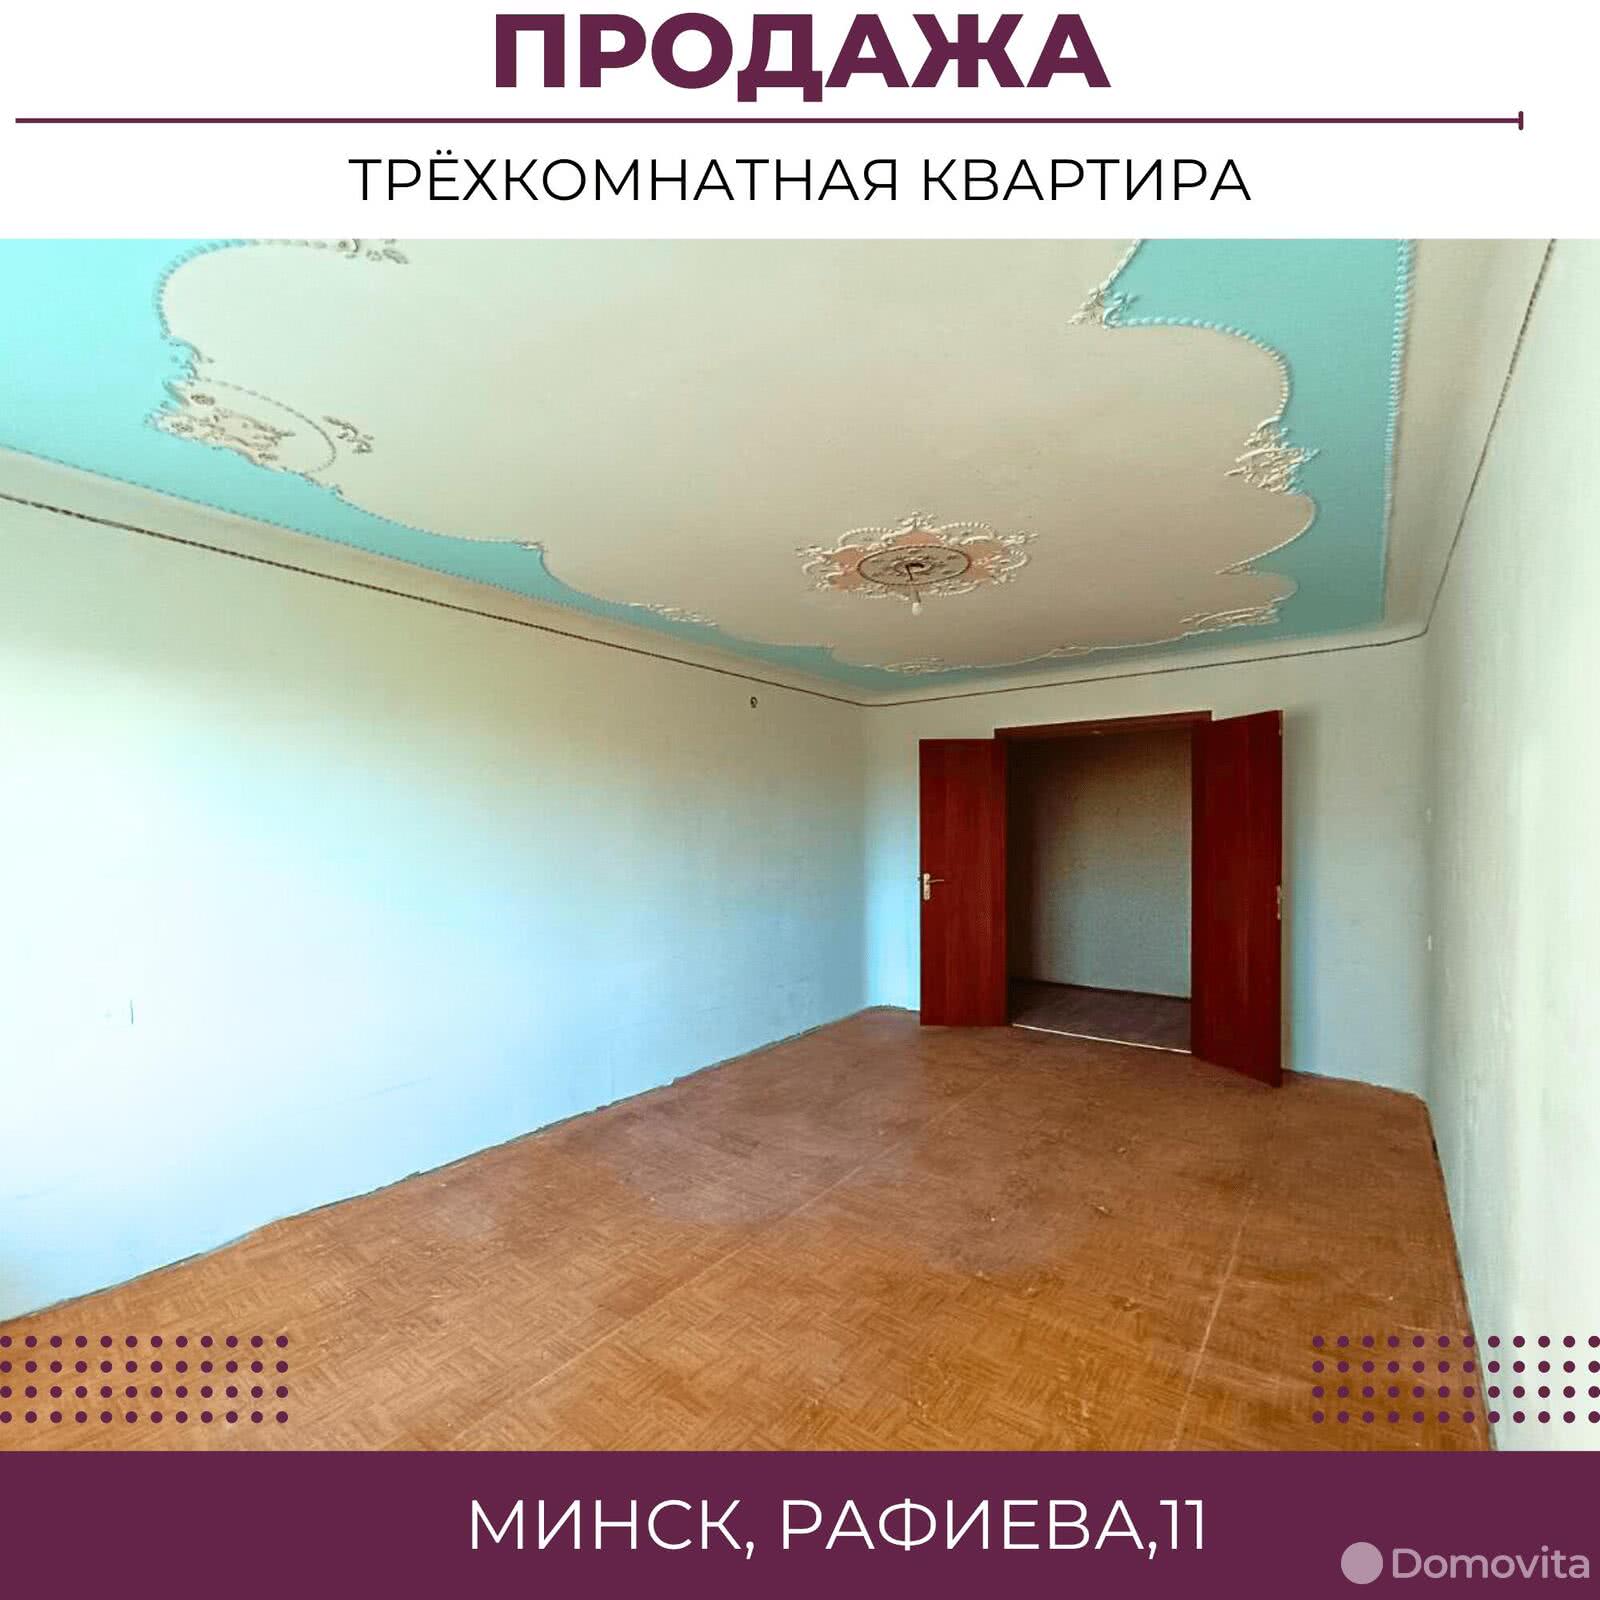 продажа квартиры, Минск, ул. Рафиева, д. 11